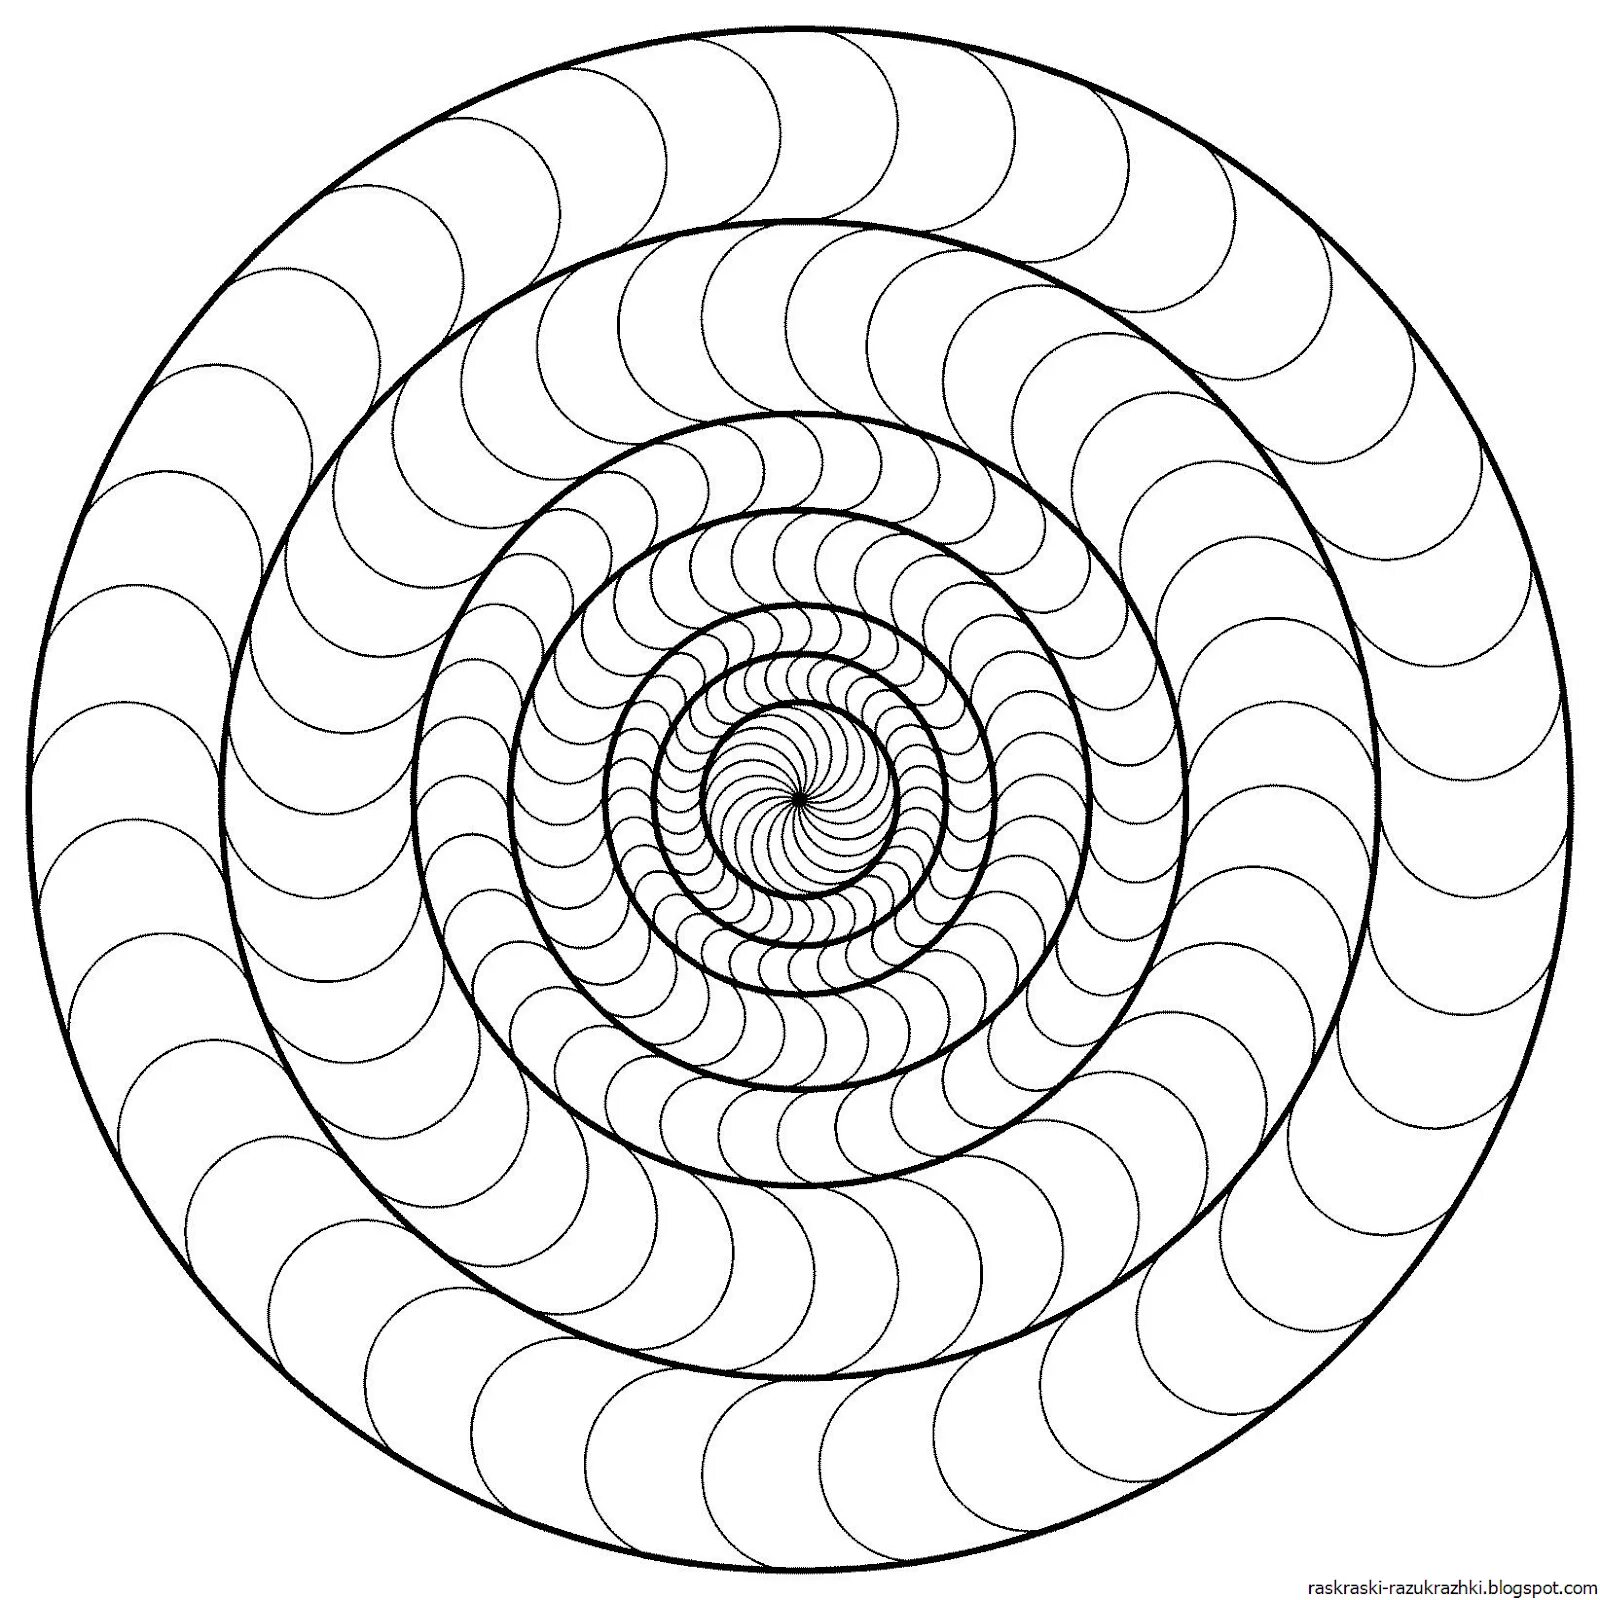 Unique celebrity spiral coloring